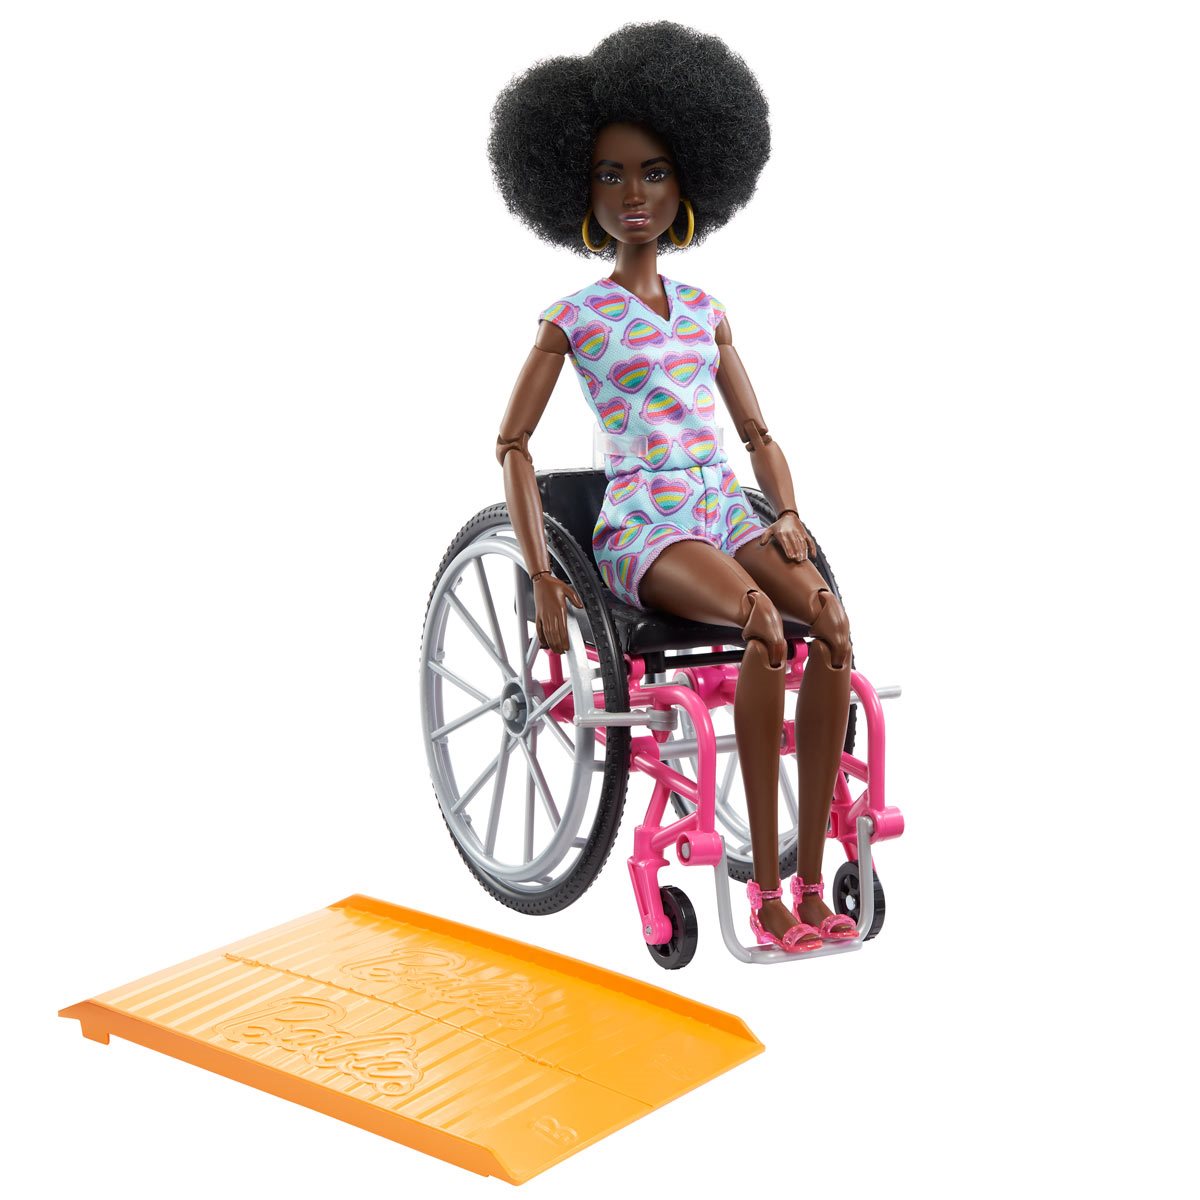 Black Barbie in a Wheelchair is Making Diversity Waves on Twitter